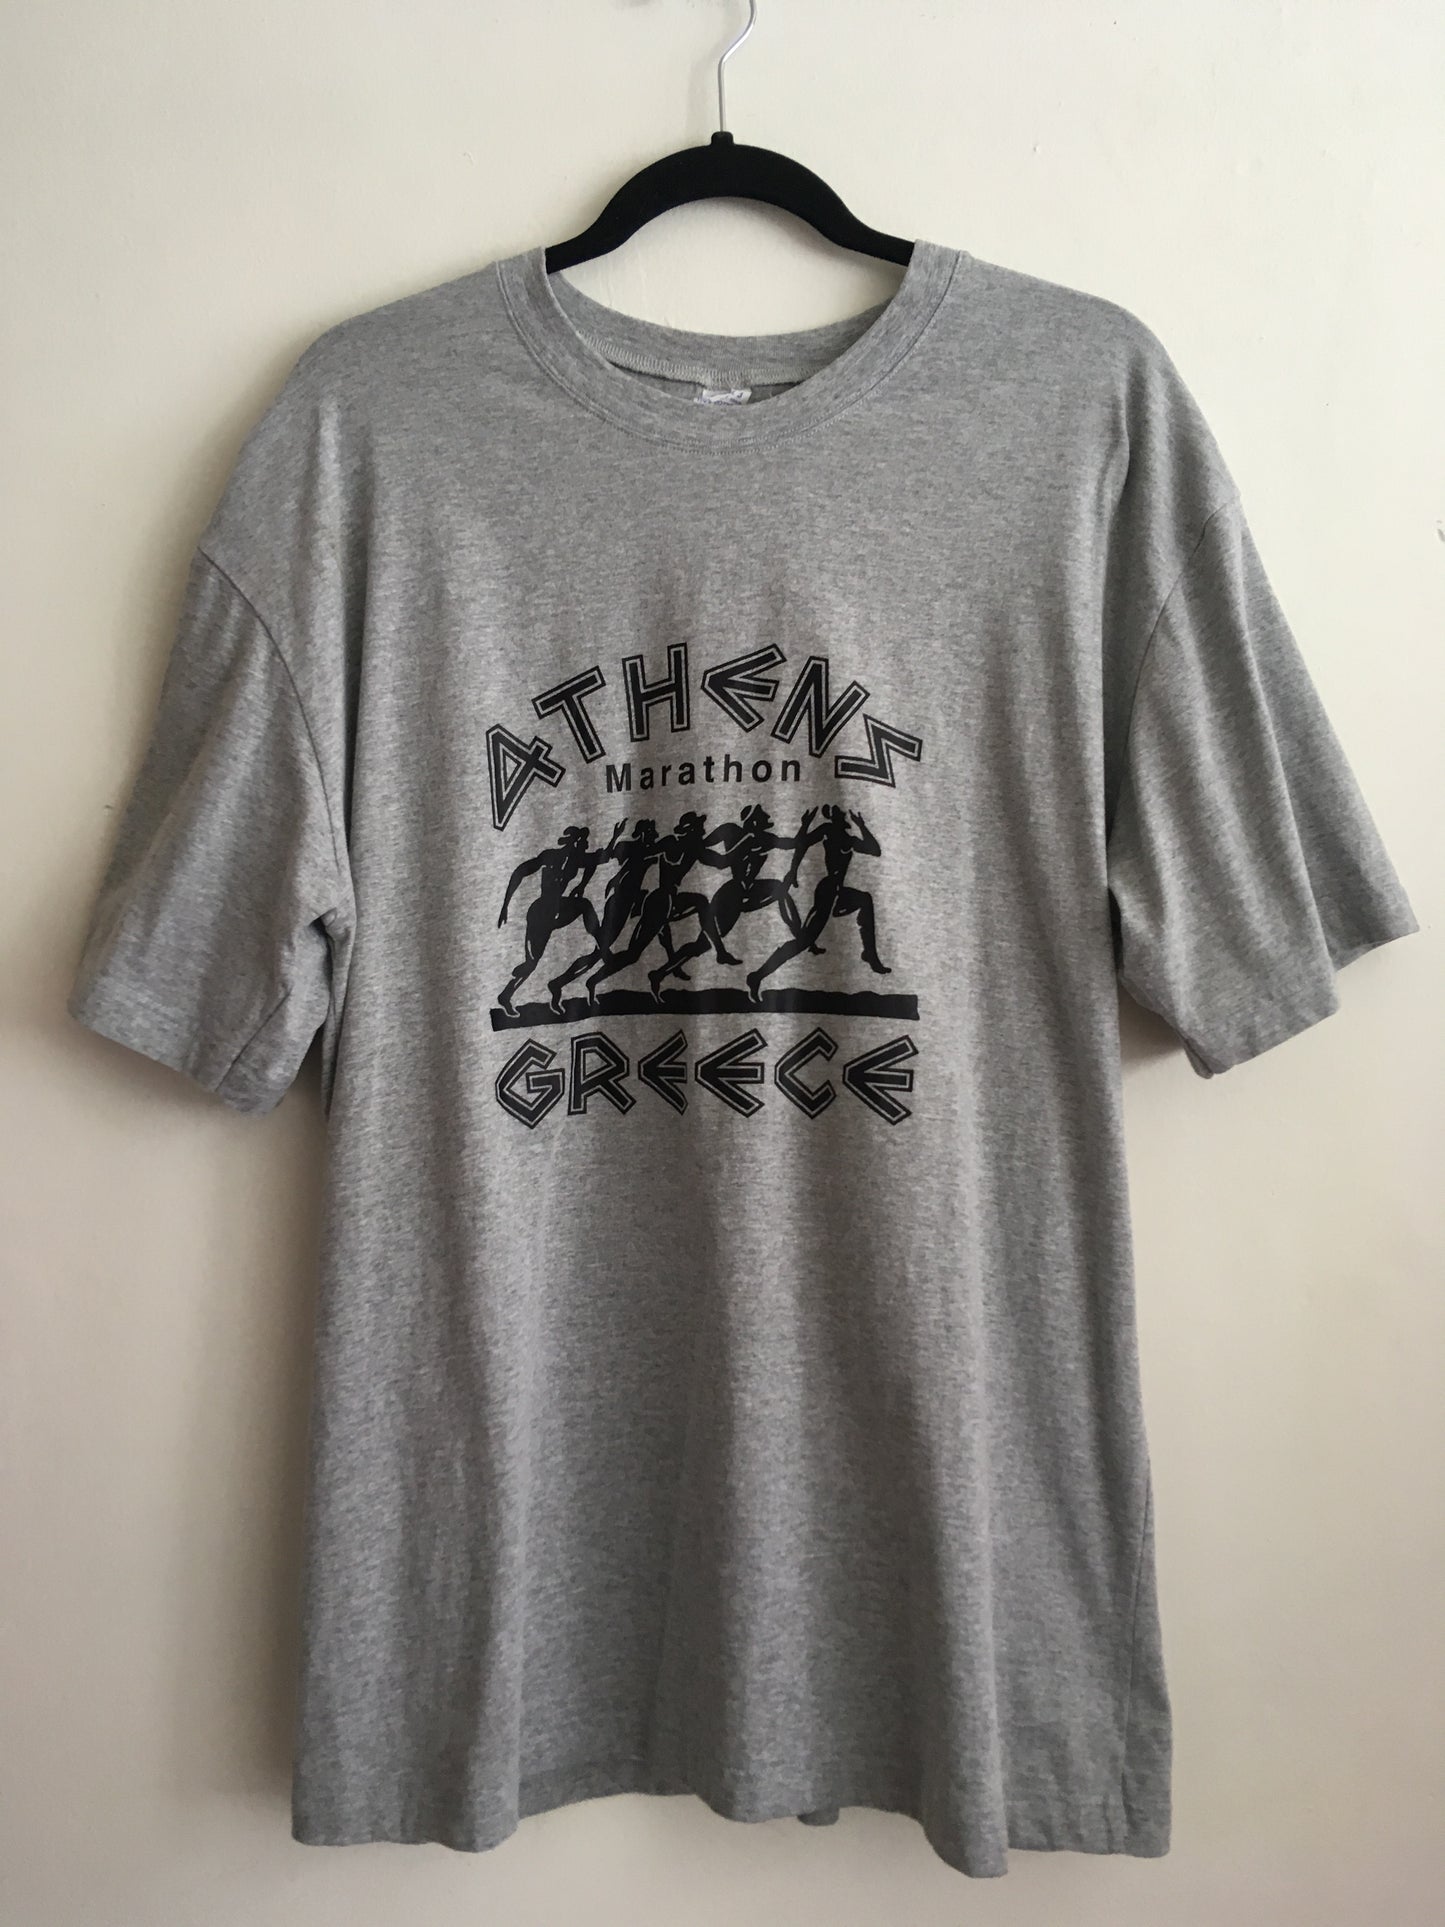 Athens Marathon 90s T-shirt